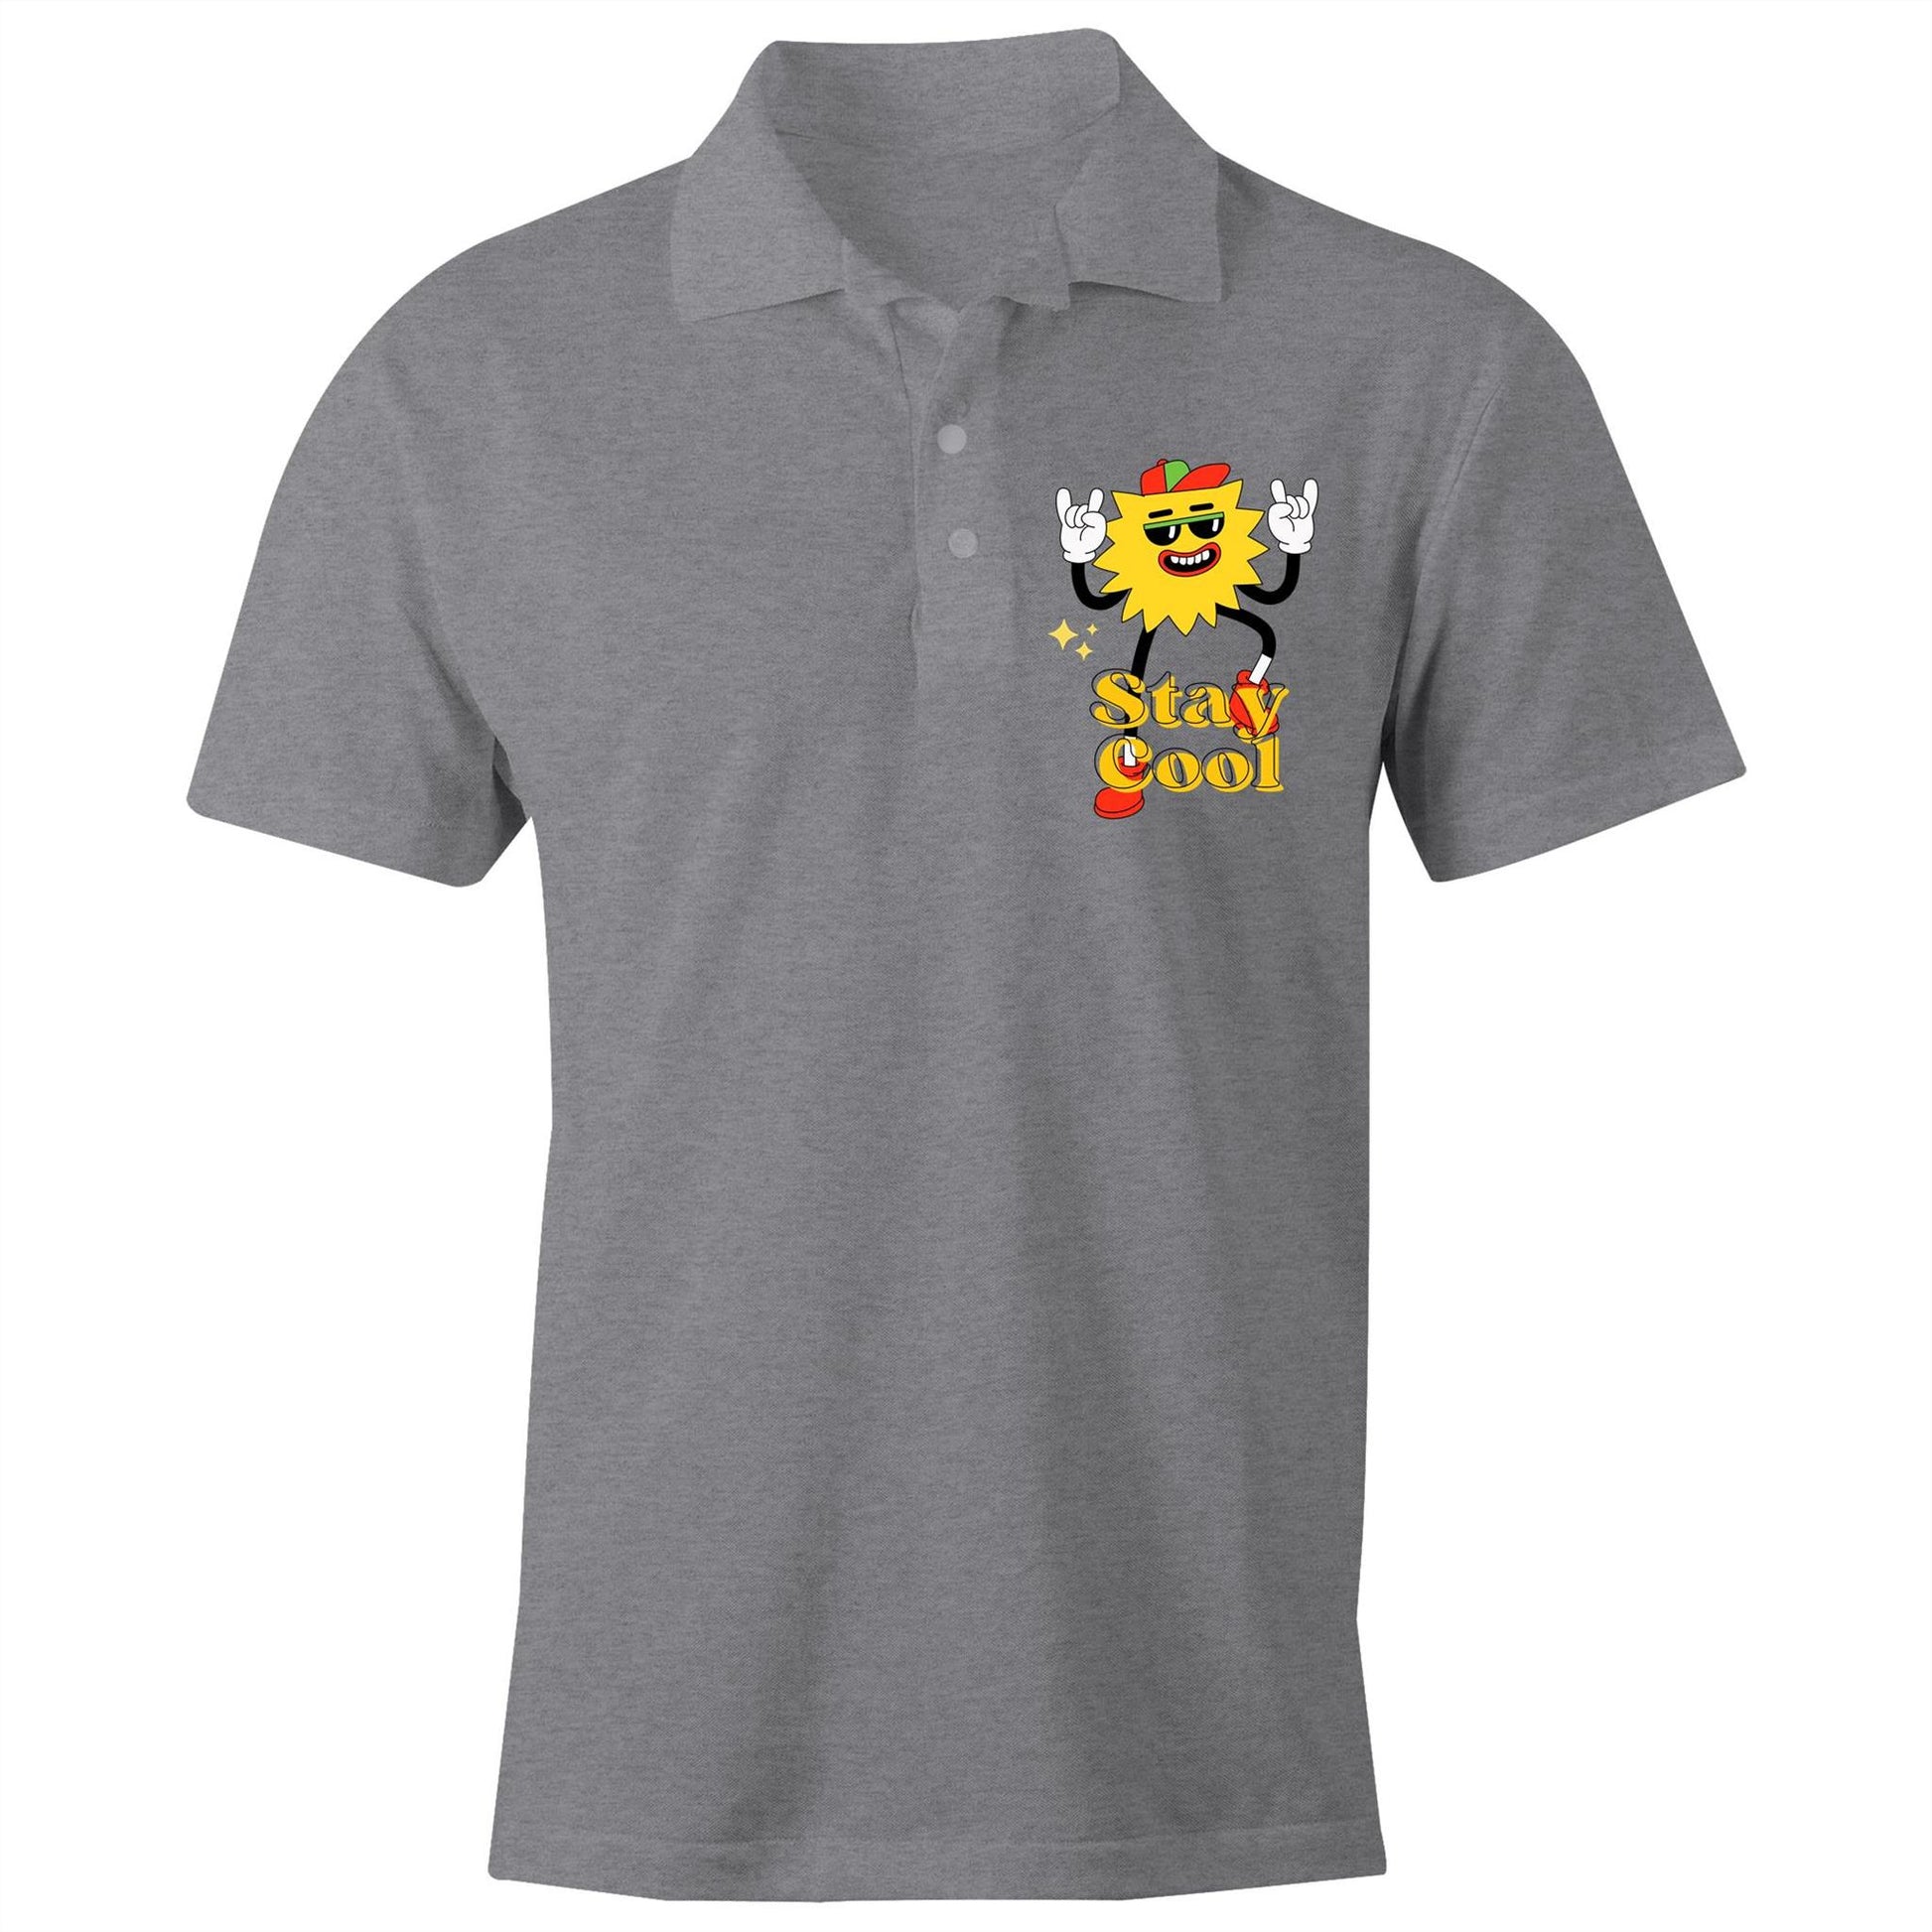 Stay Cool - Chad S/S Polo Shirt, Printed Grey Marle Polo Shirt Retro